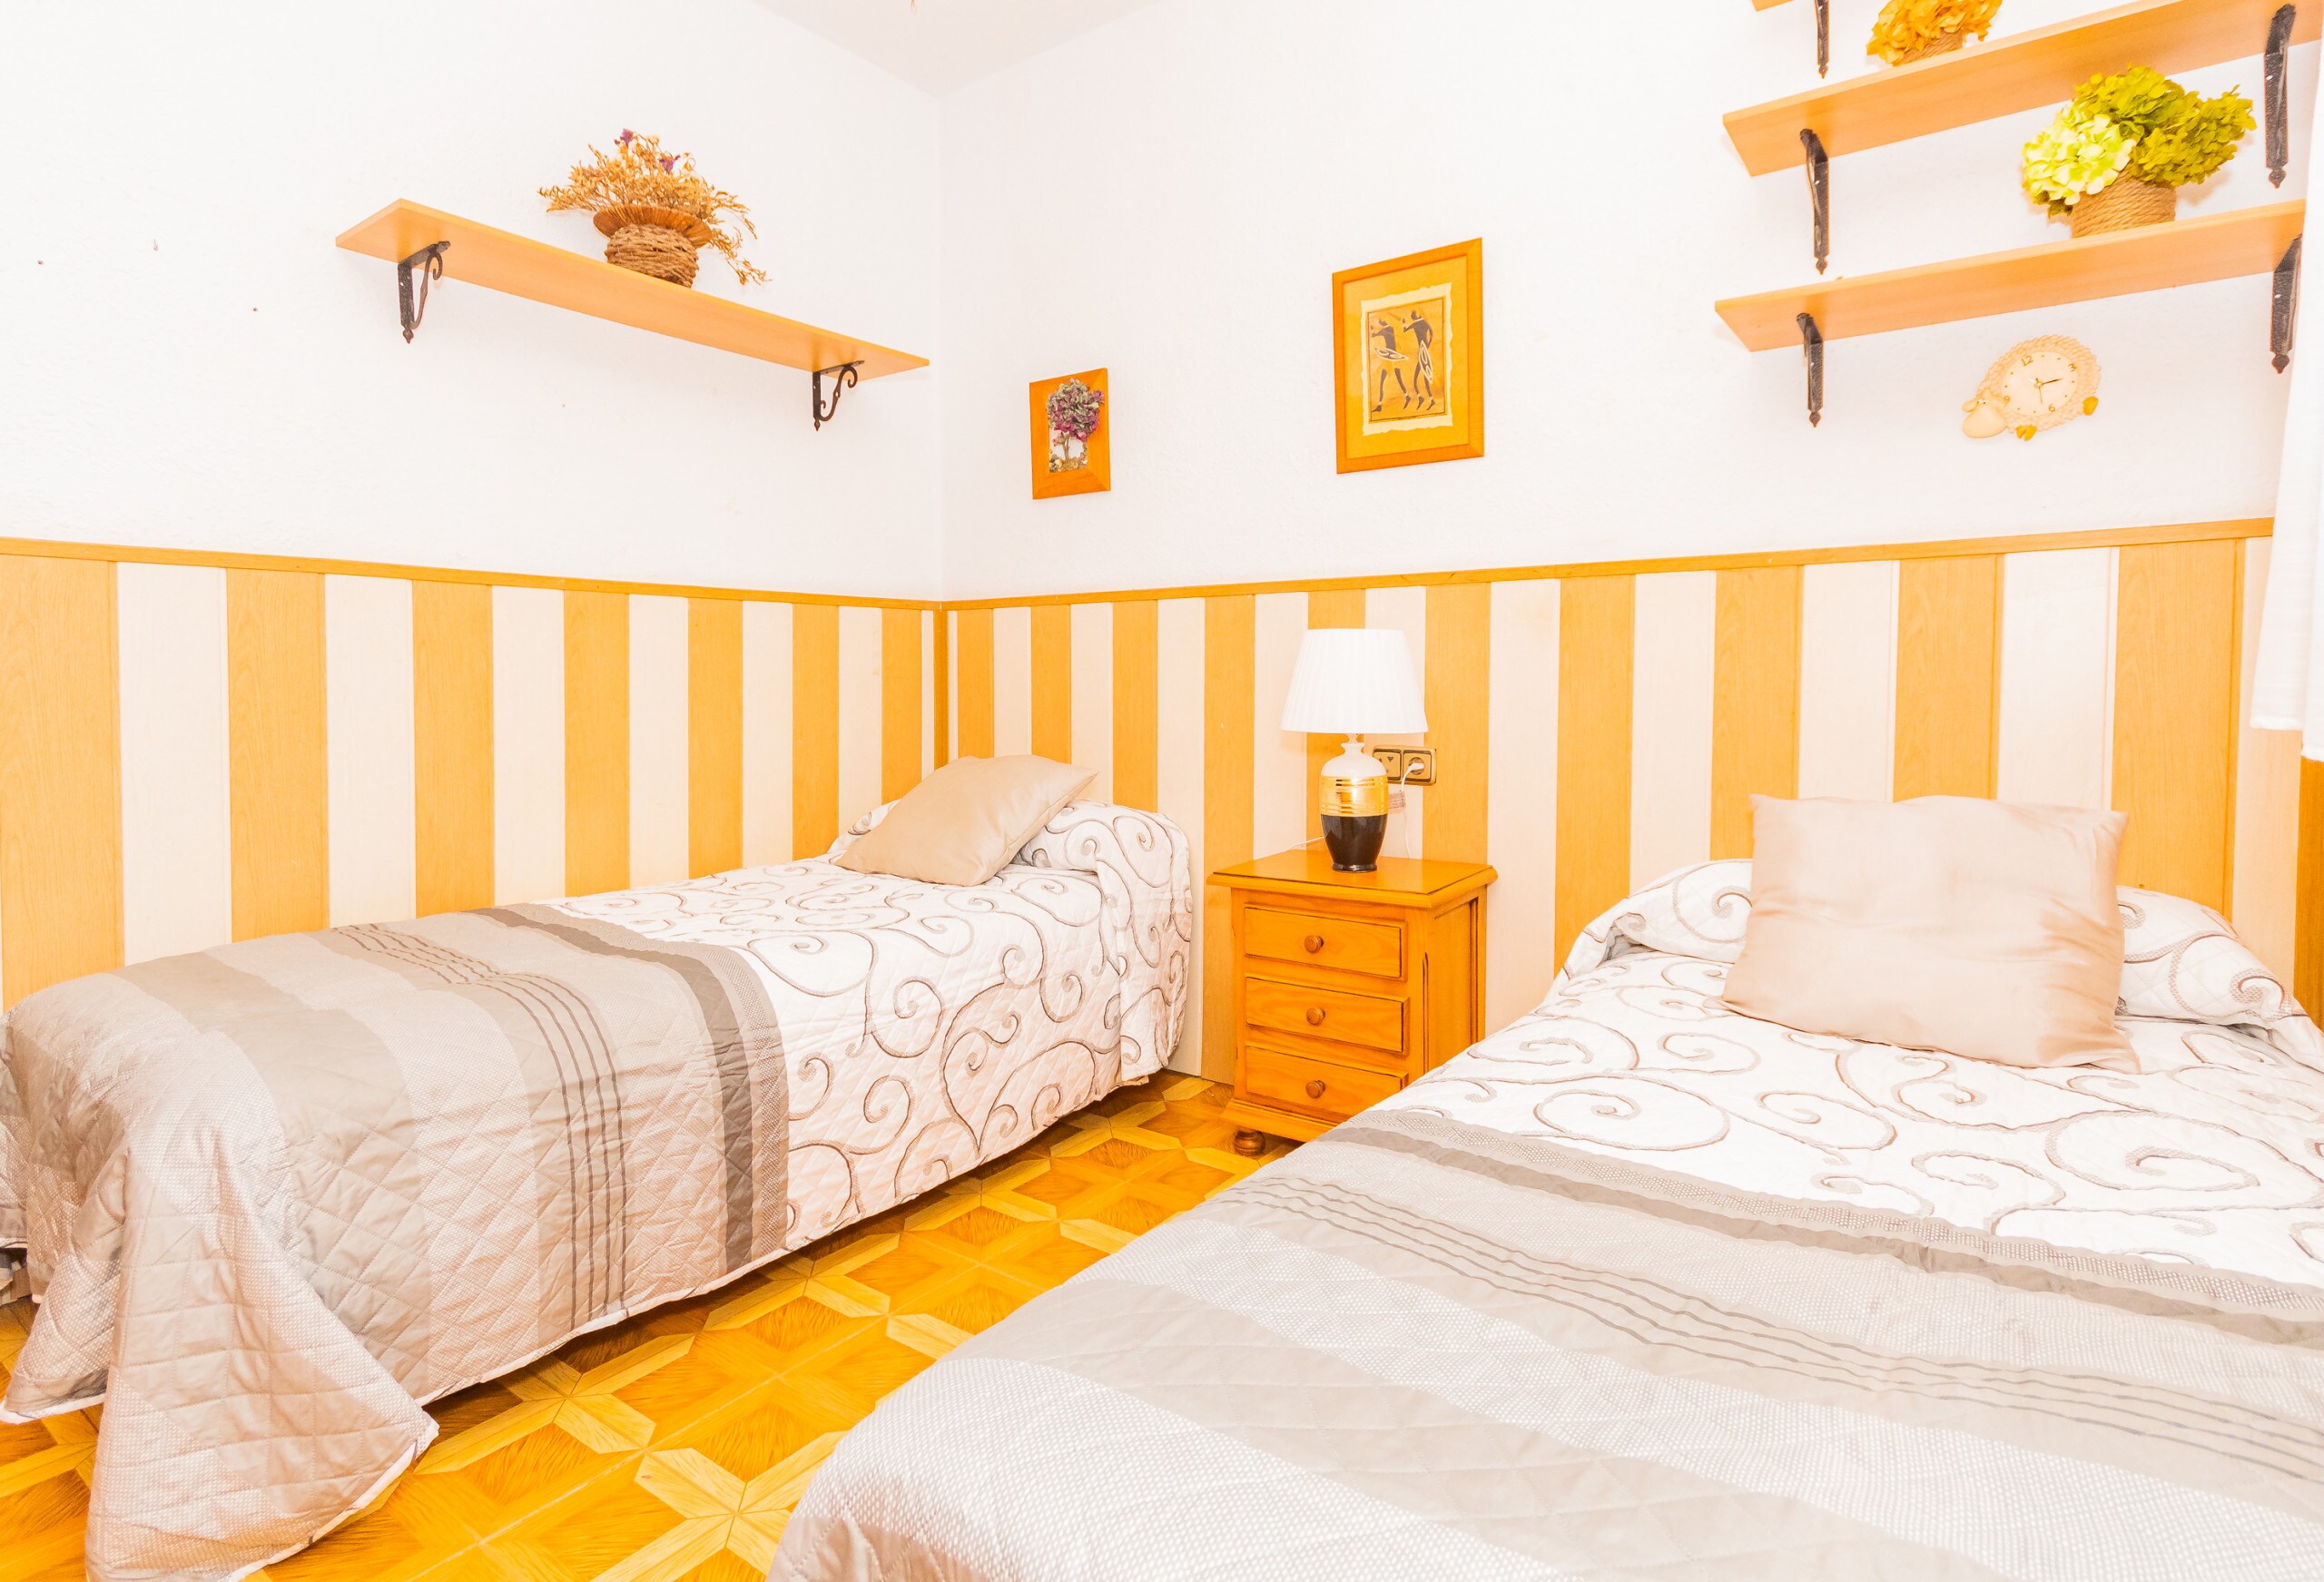 Enjoy the bedroom of this Finca in Alhaurín de la Torre